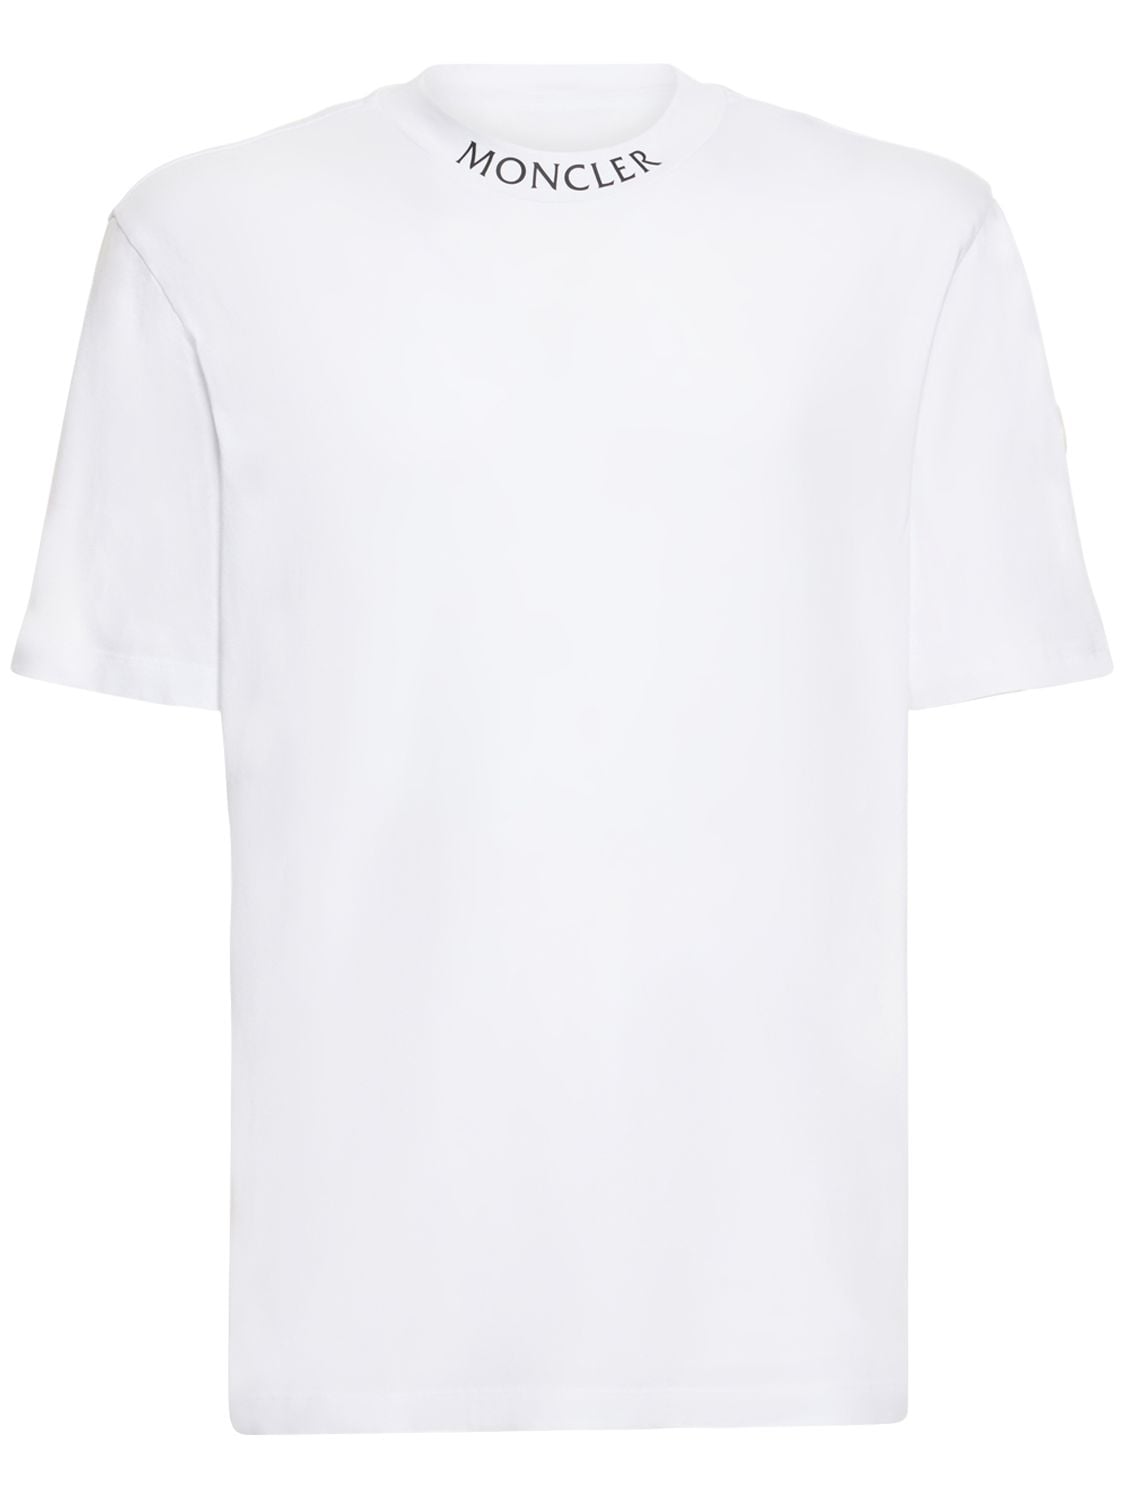 MONCLER Cotton Jersey T-shirt